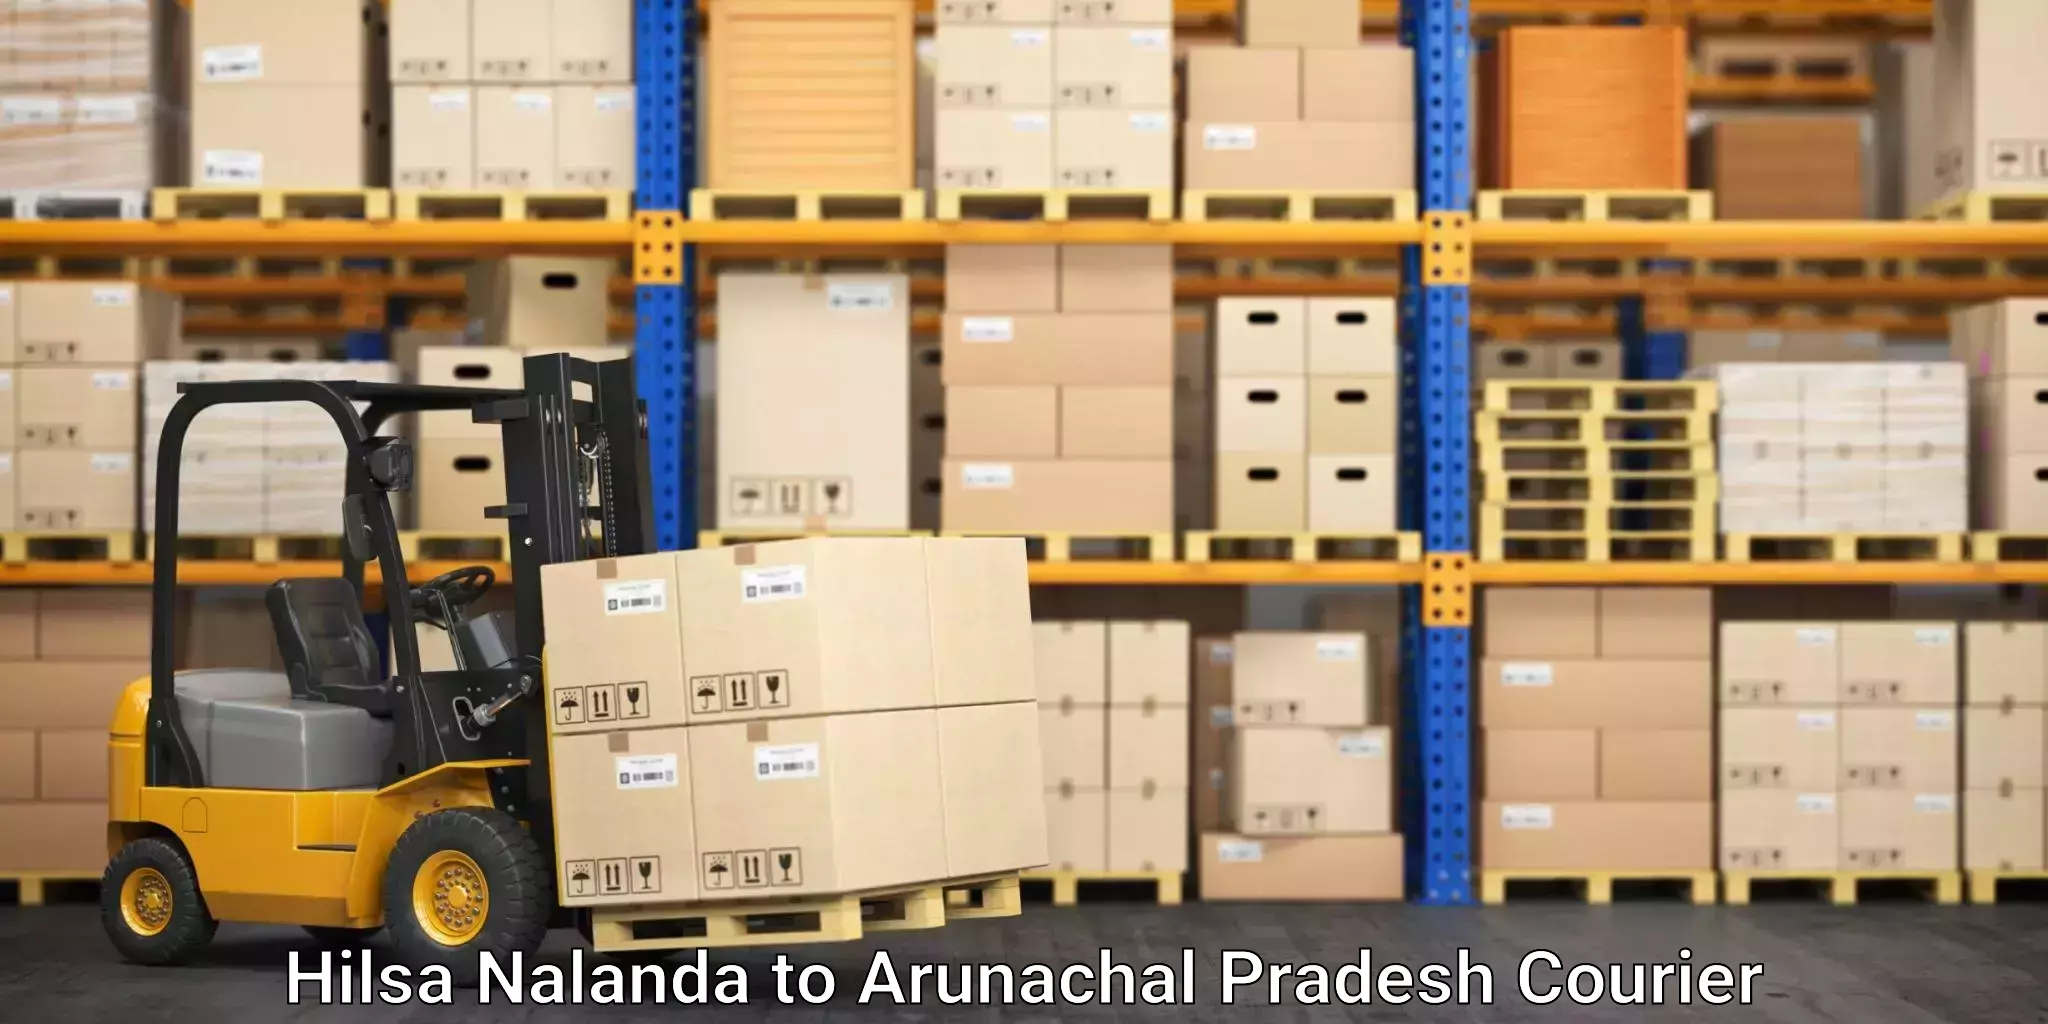 Furniture delivery service Hilsa Nalanda to Arunachal Pradesh